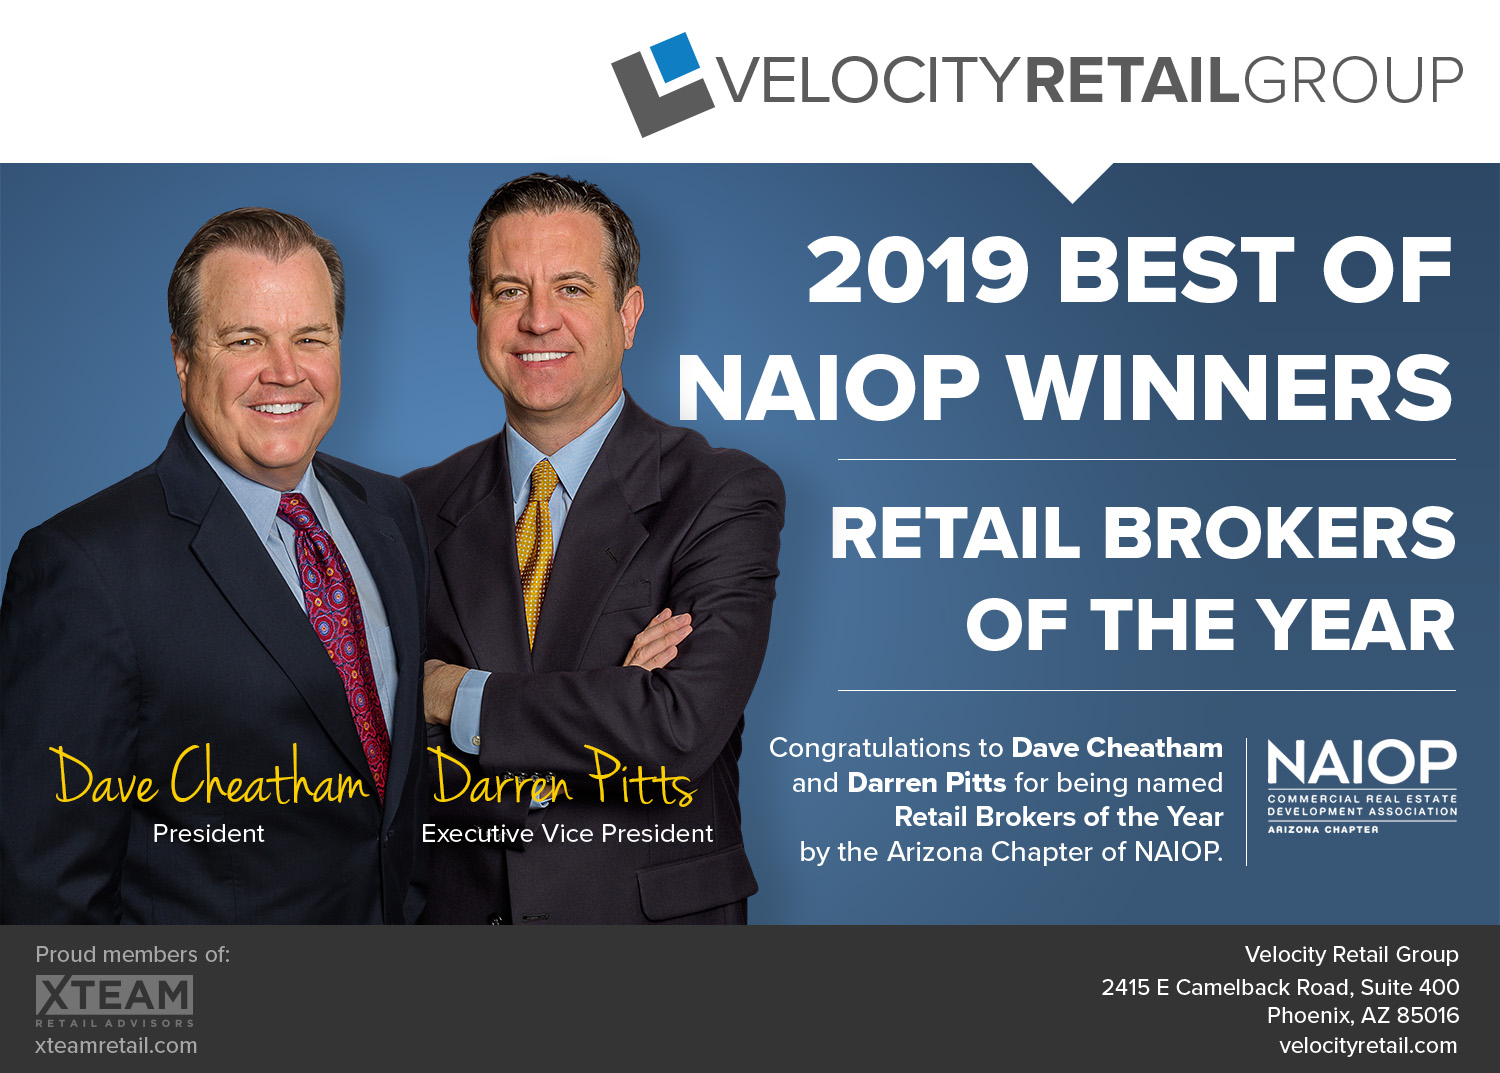 Velocity Retail's Dave Cheatham & Darren Pitts Win NAIOP’s Retail Broker Team of the Year 2